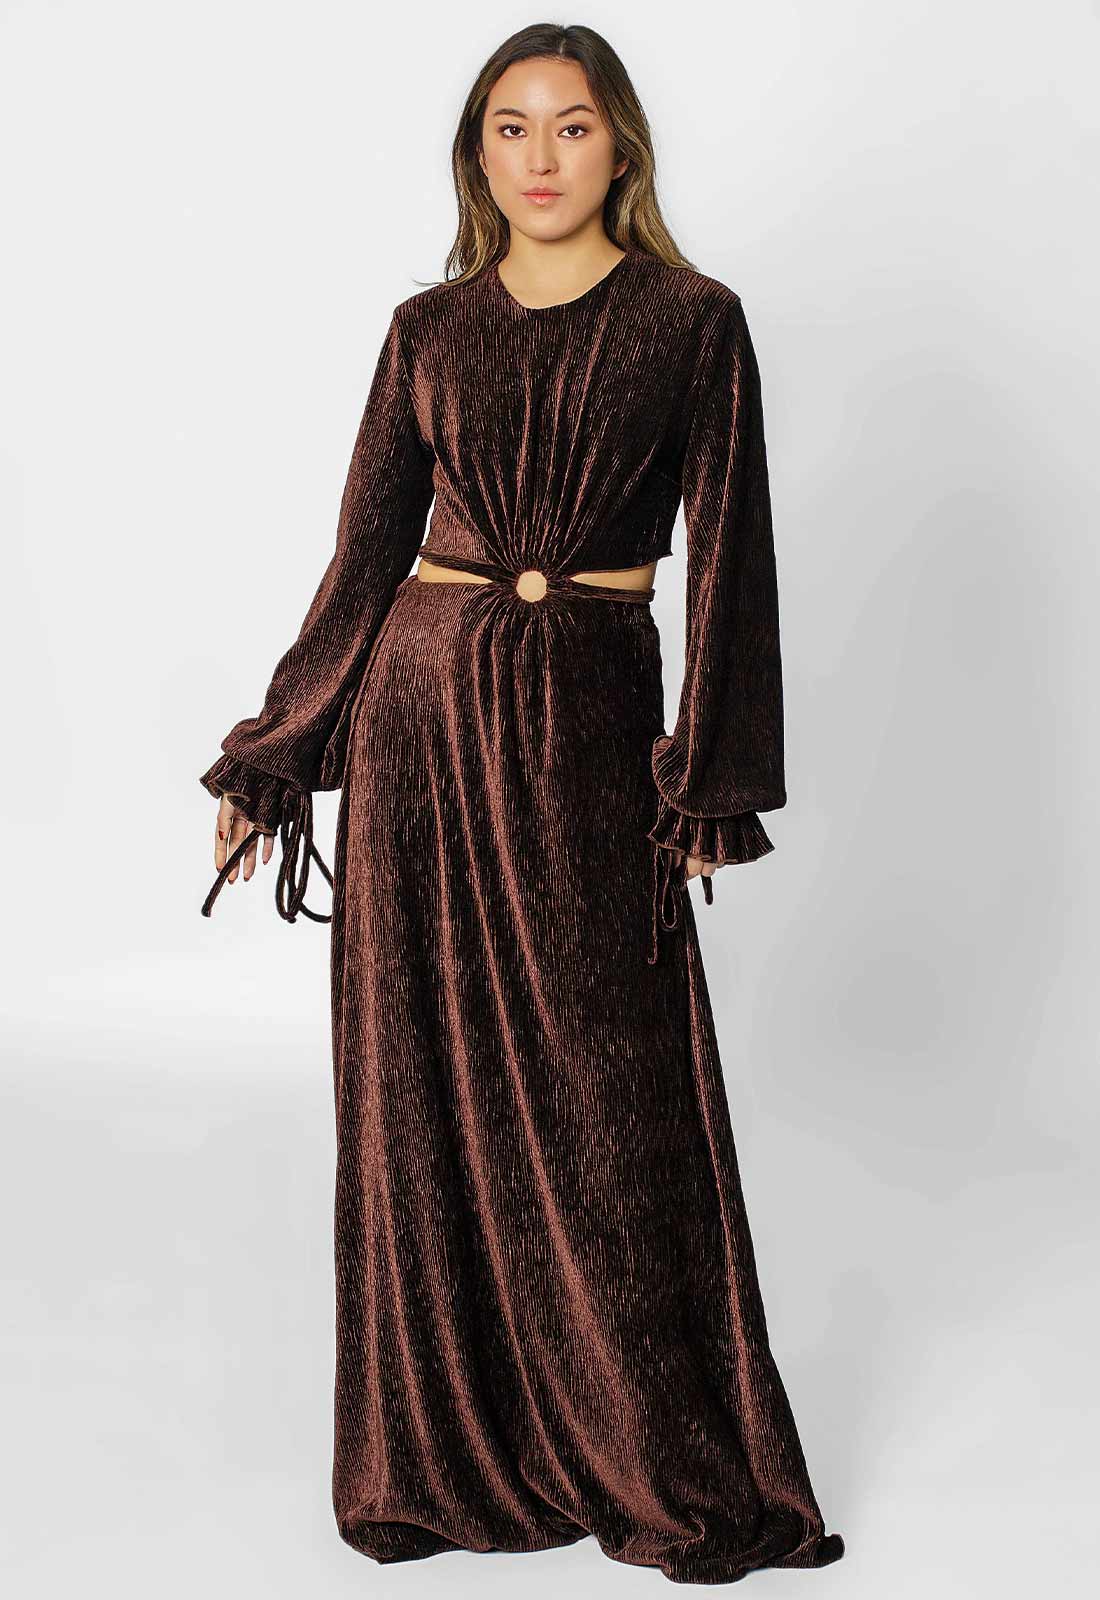 Zina Chocolate dress